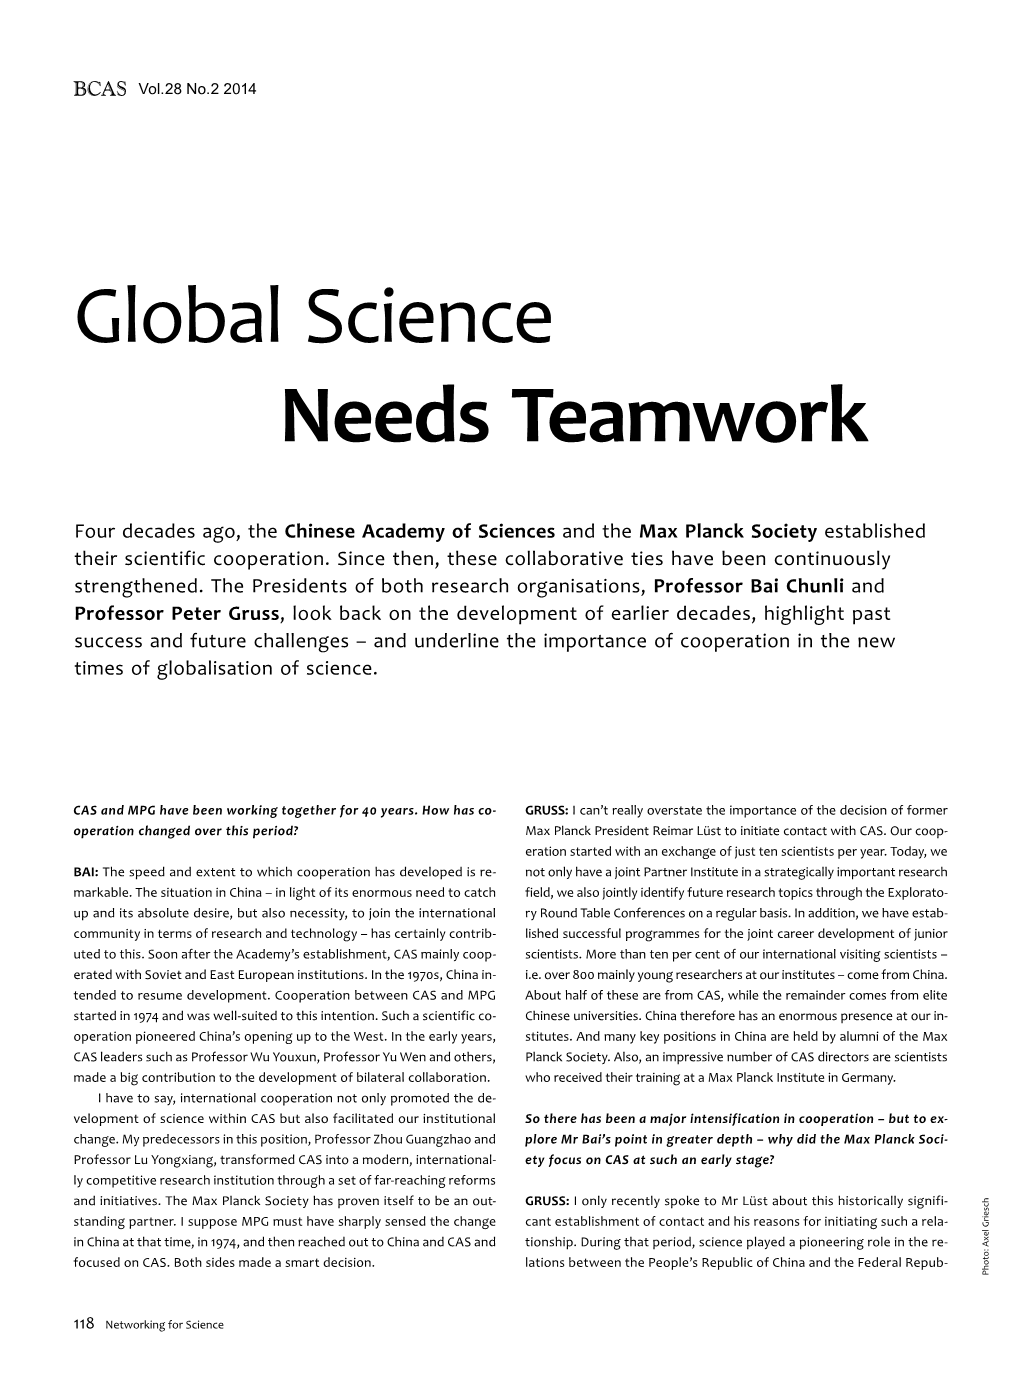 Global Science Needs Teamwork